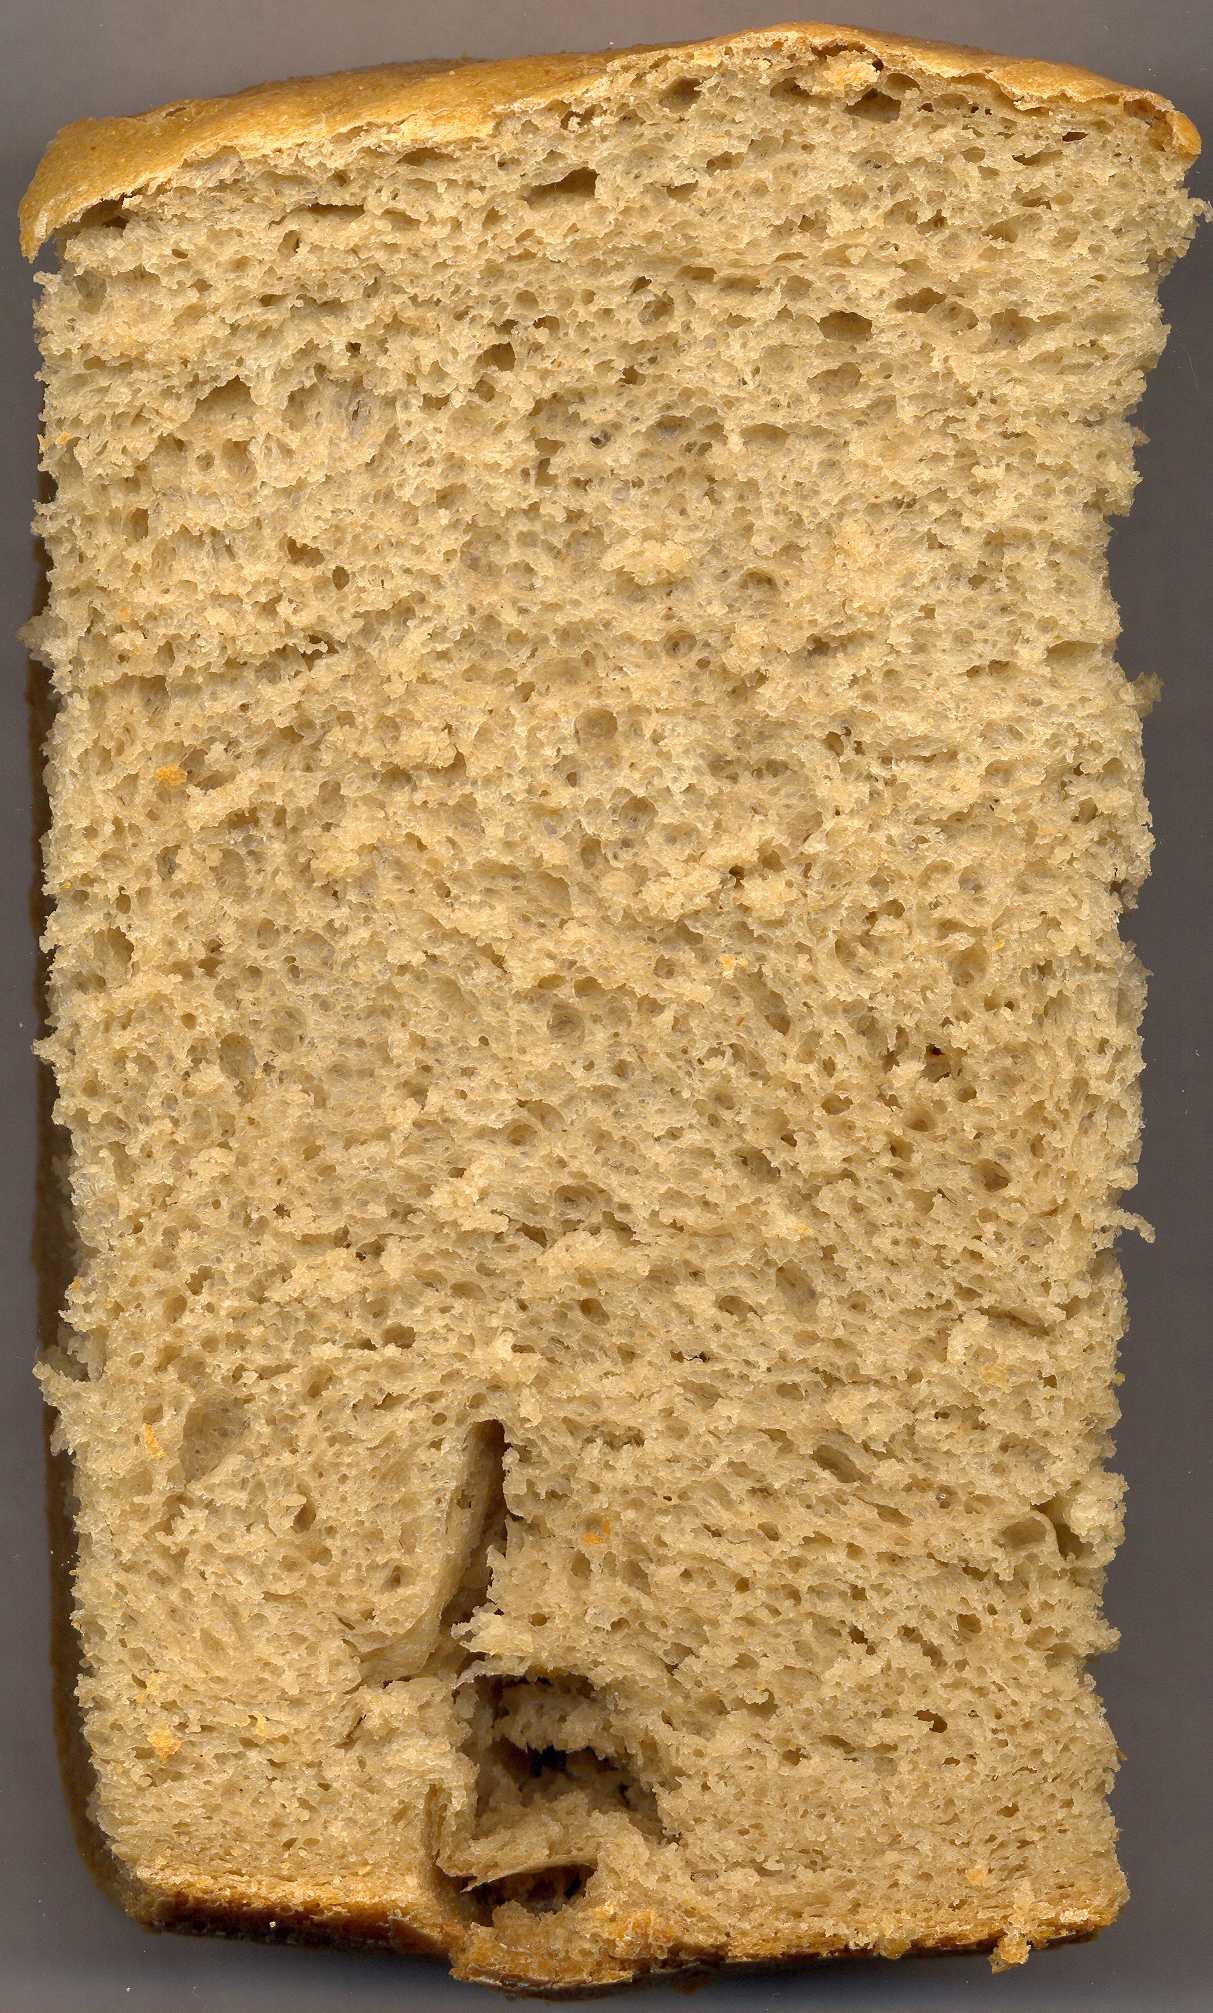 LG HB-1051. Pane di frumento-avena-grano saraceno